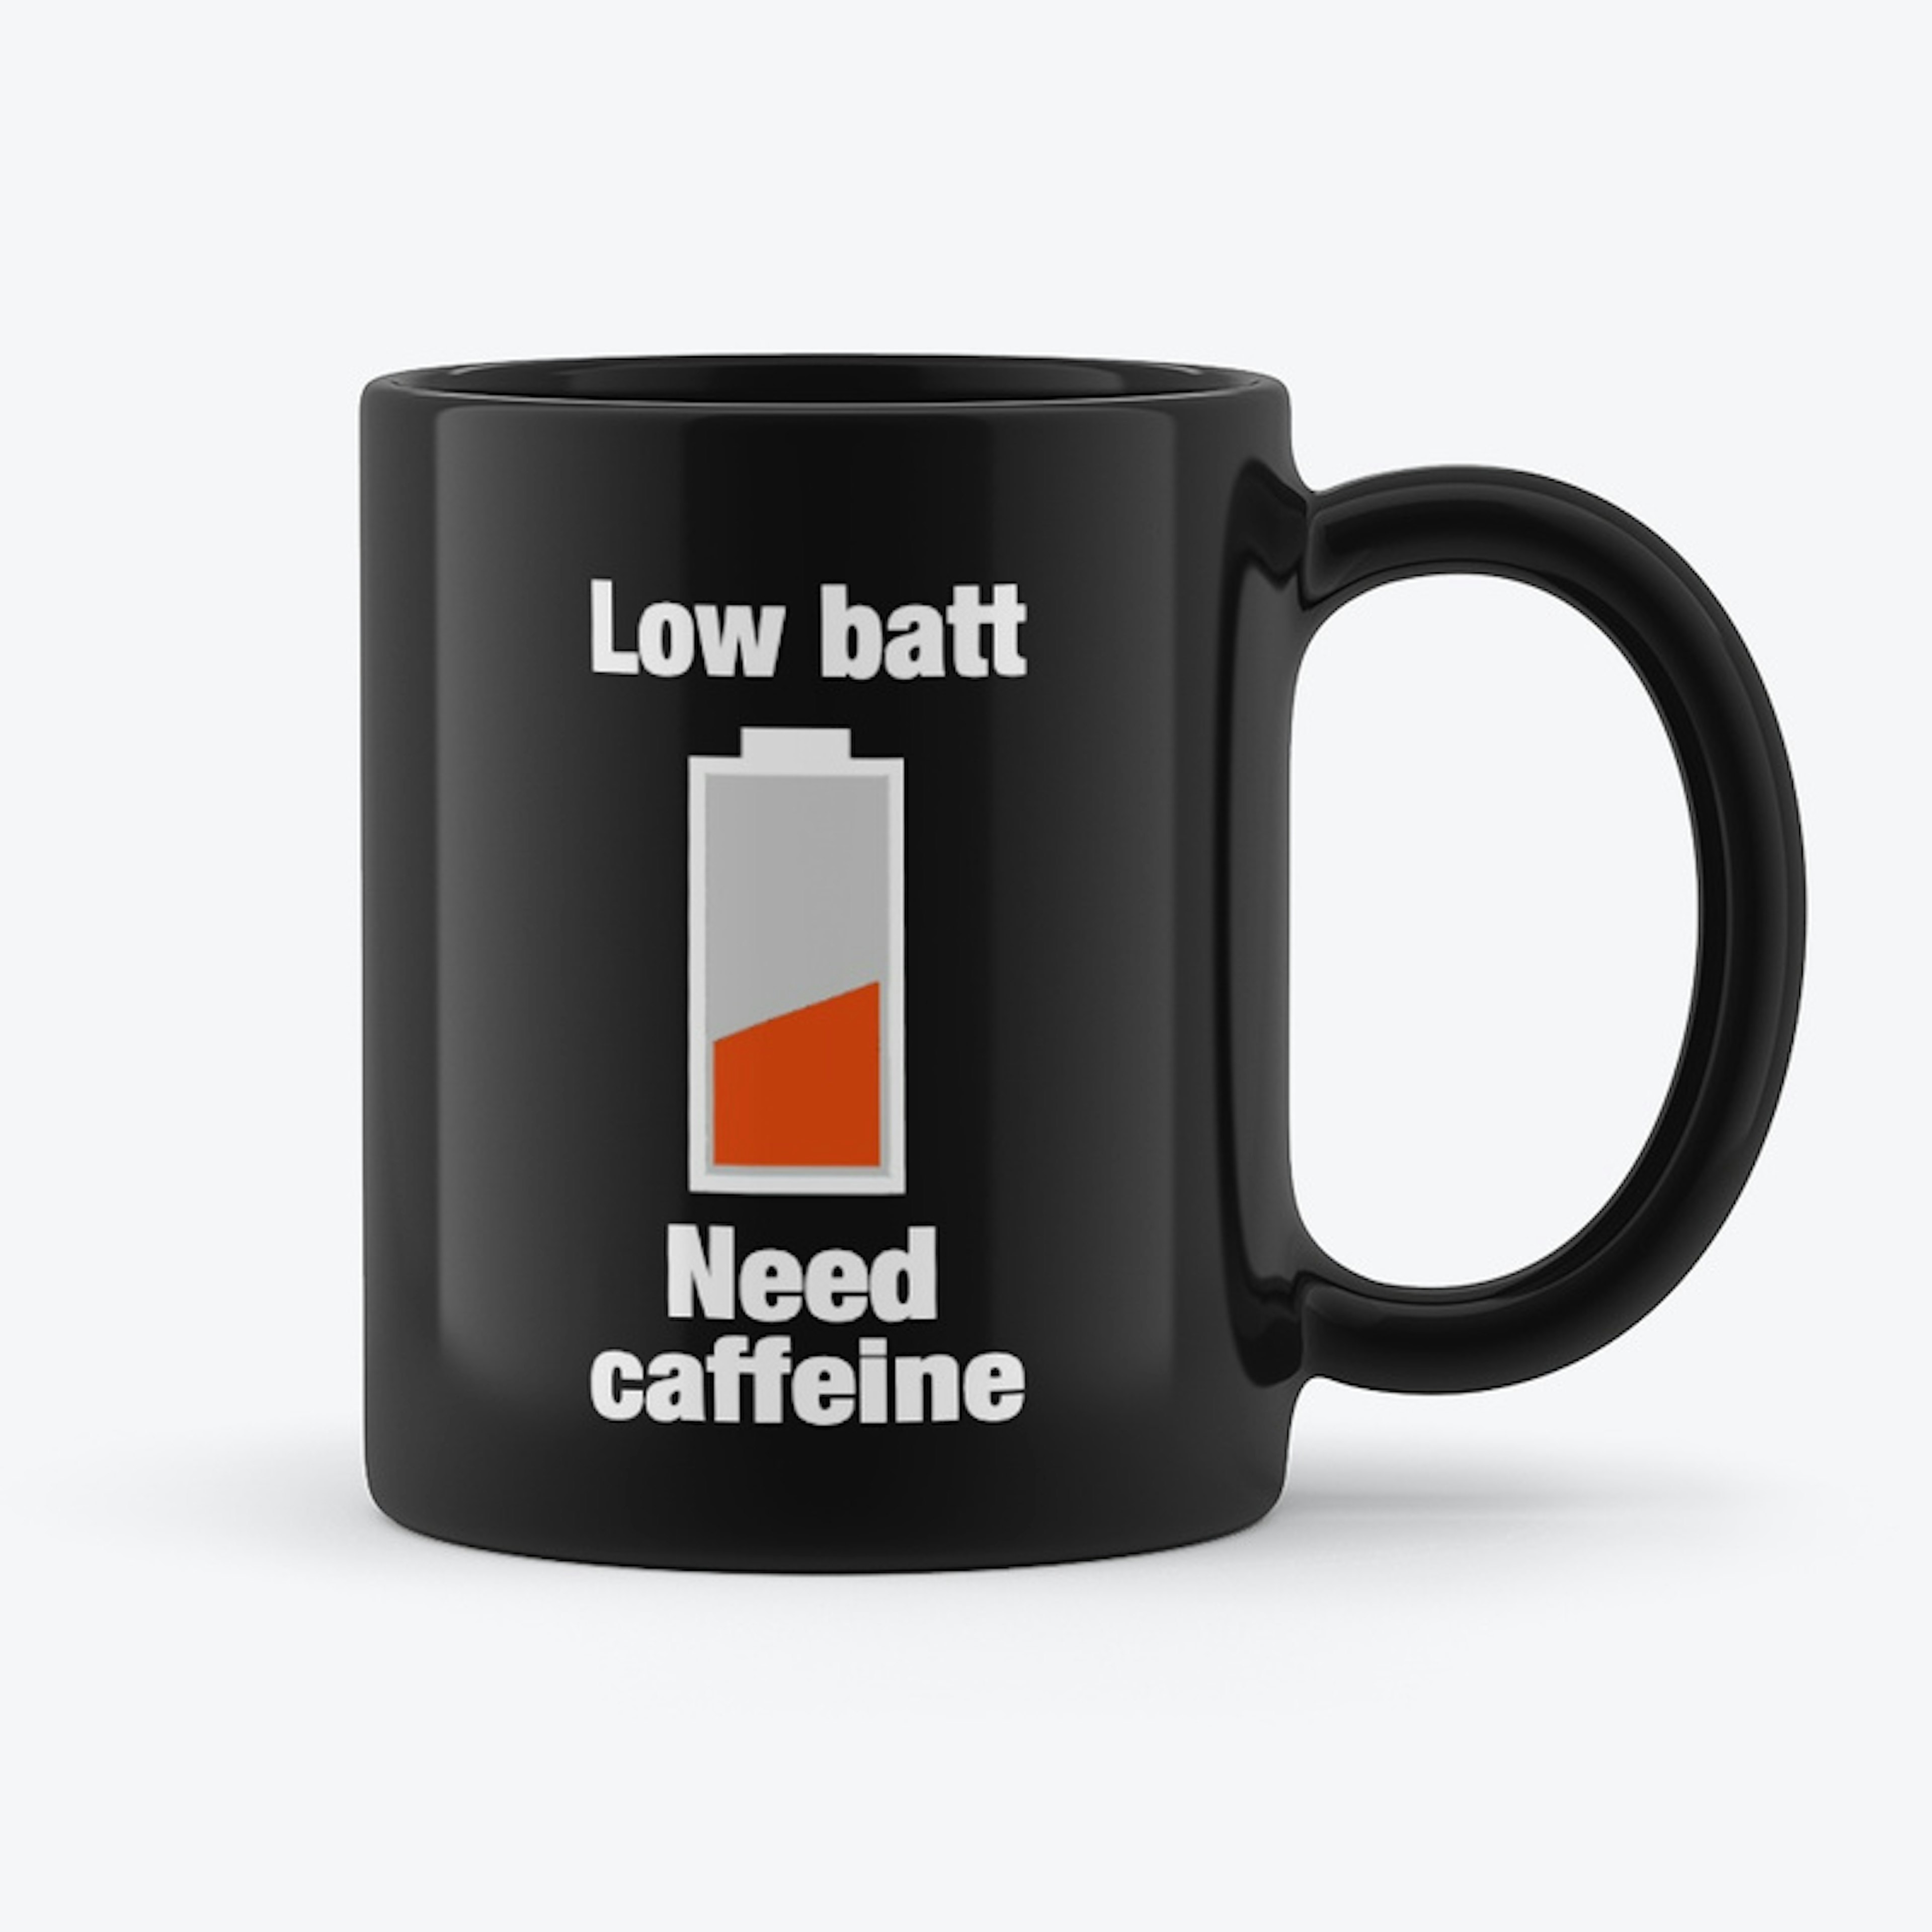 Low battery need caffeine